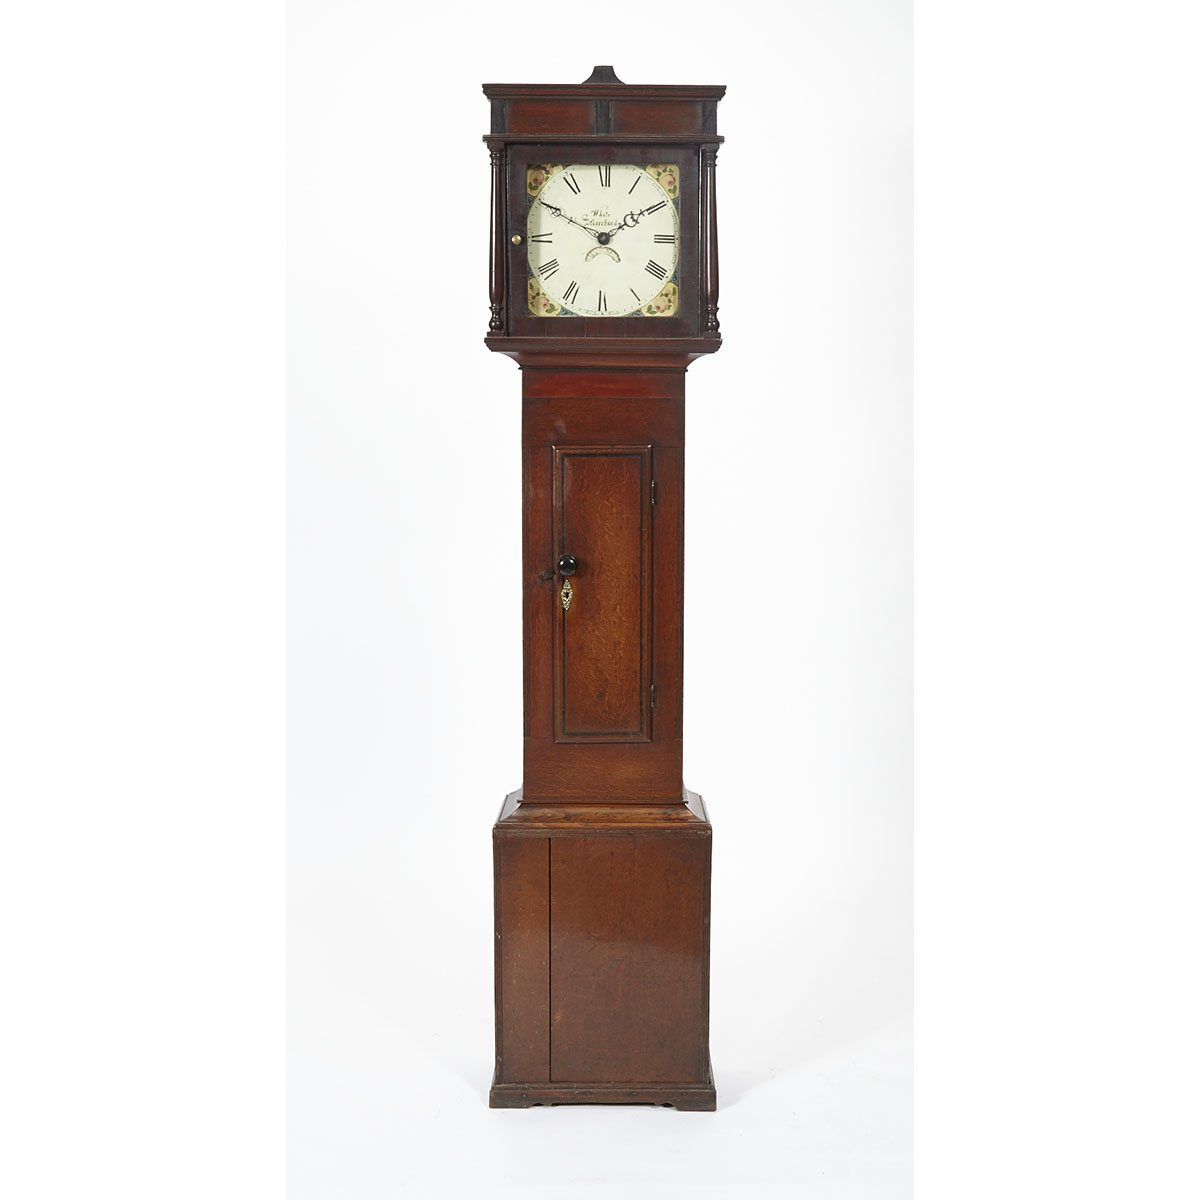 English Oak Tall Case Clock,White, Morchard, late 18th century